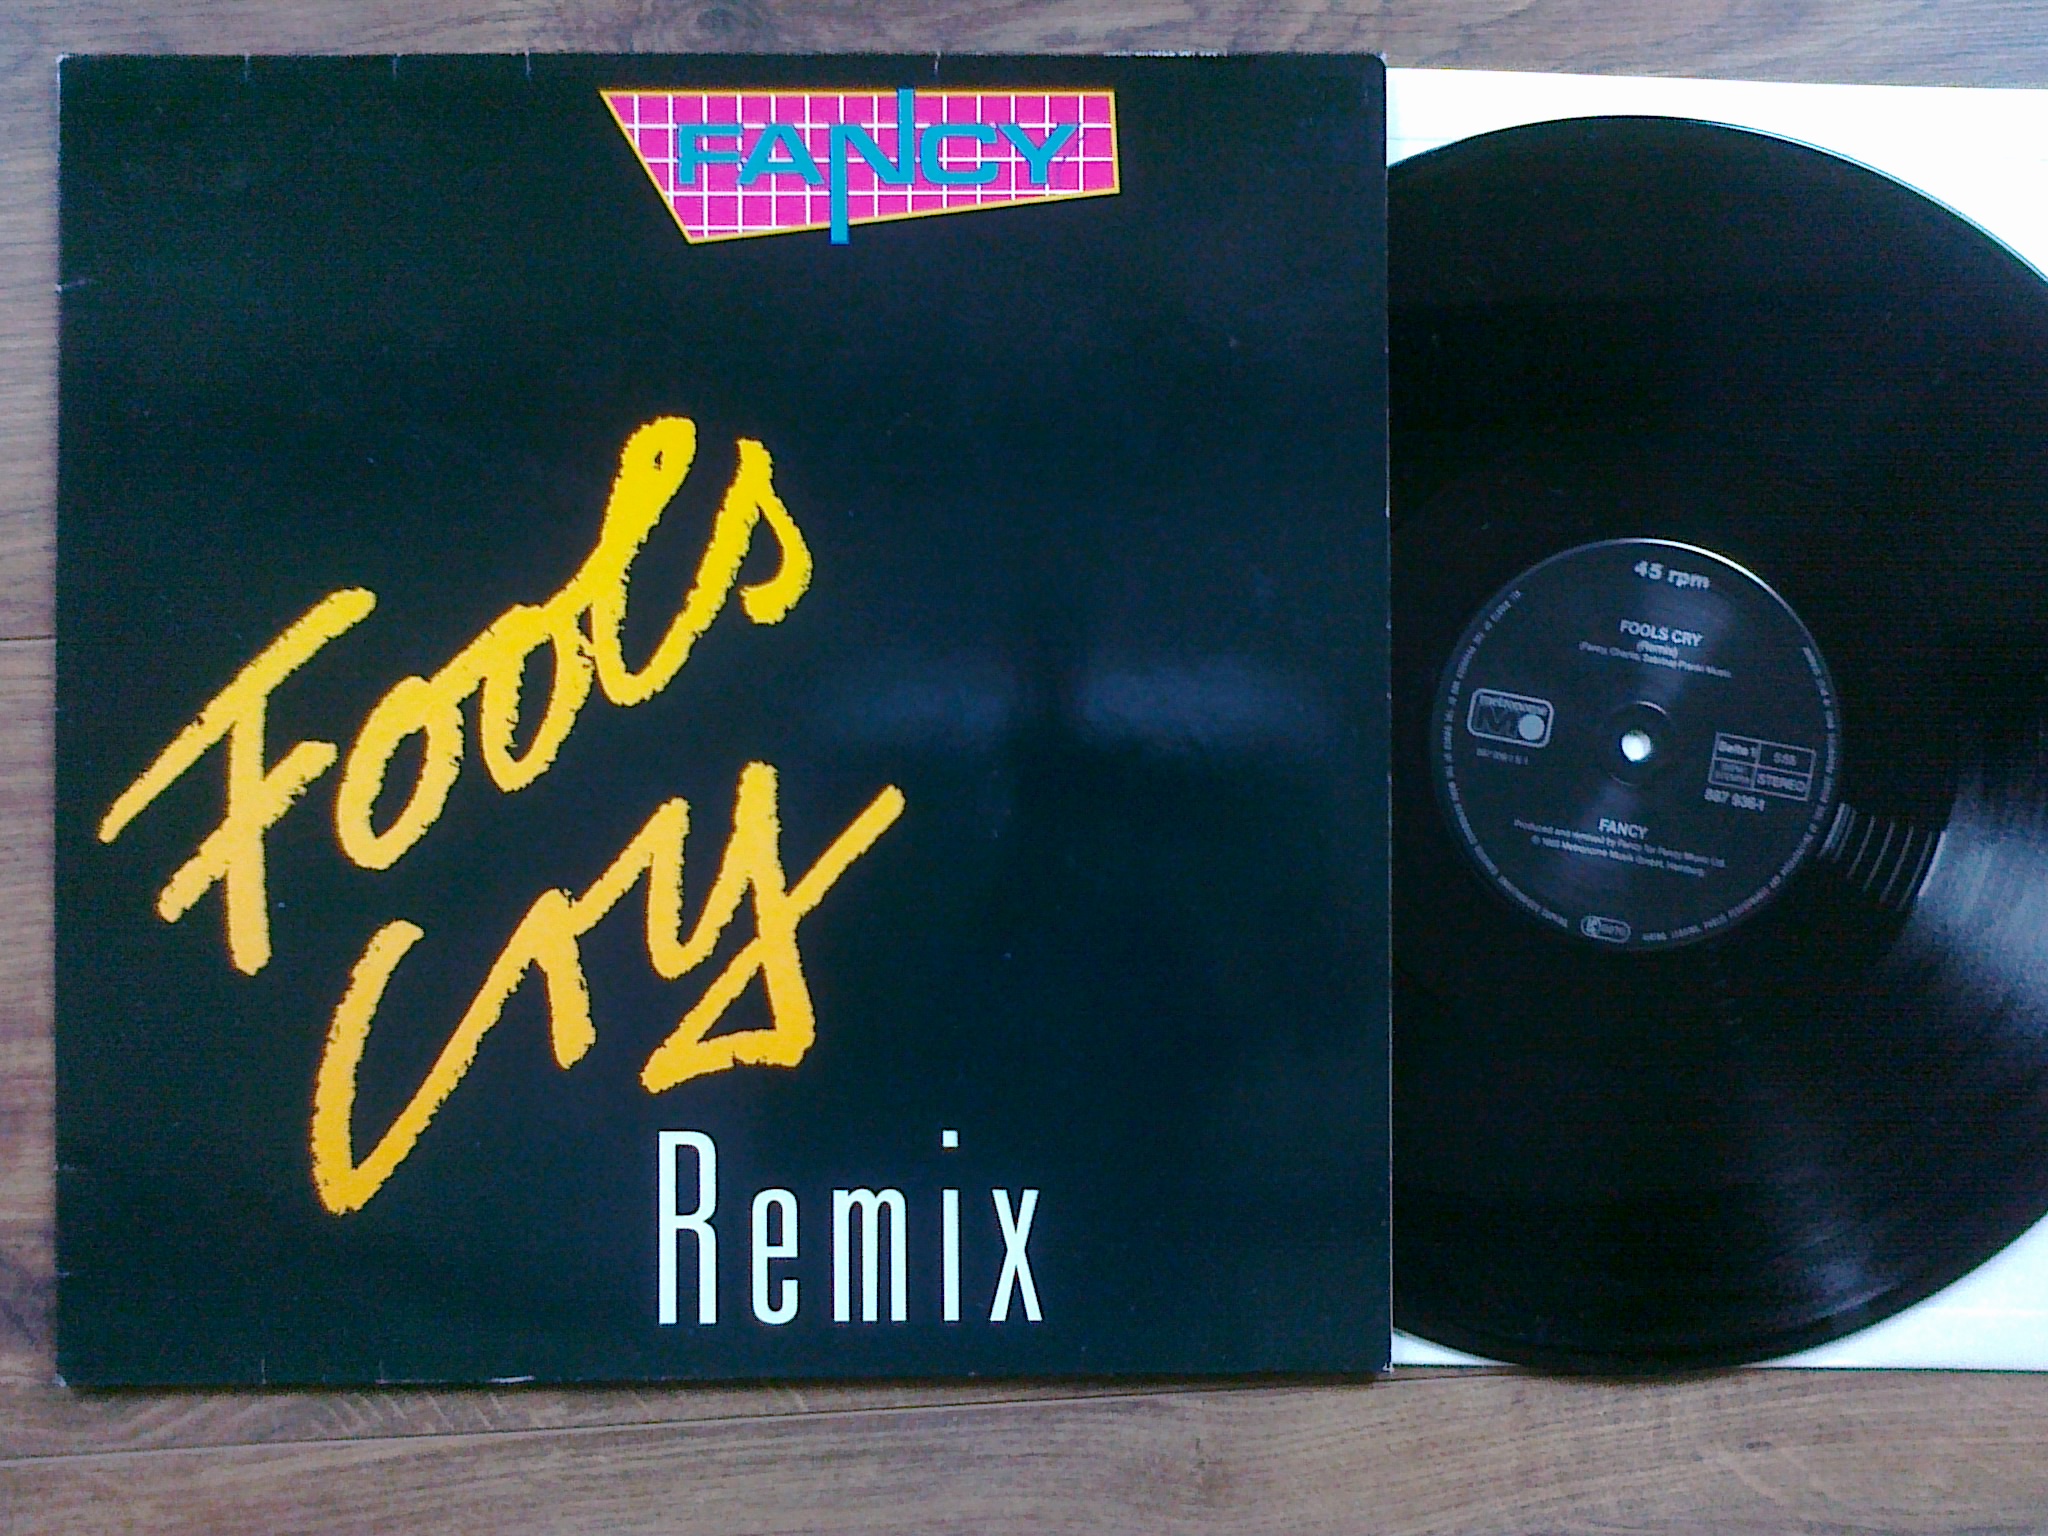 Fancy - Fools Cry Remix